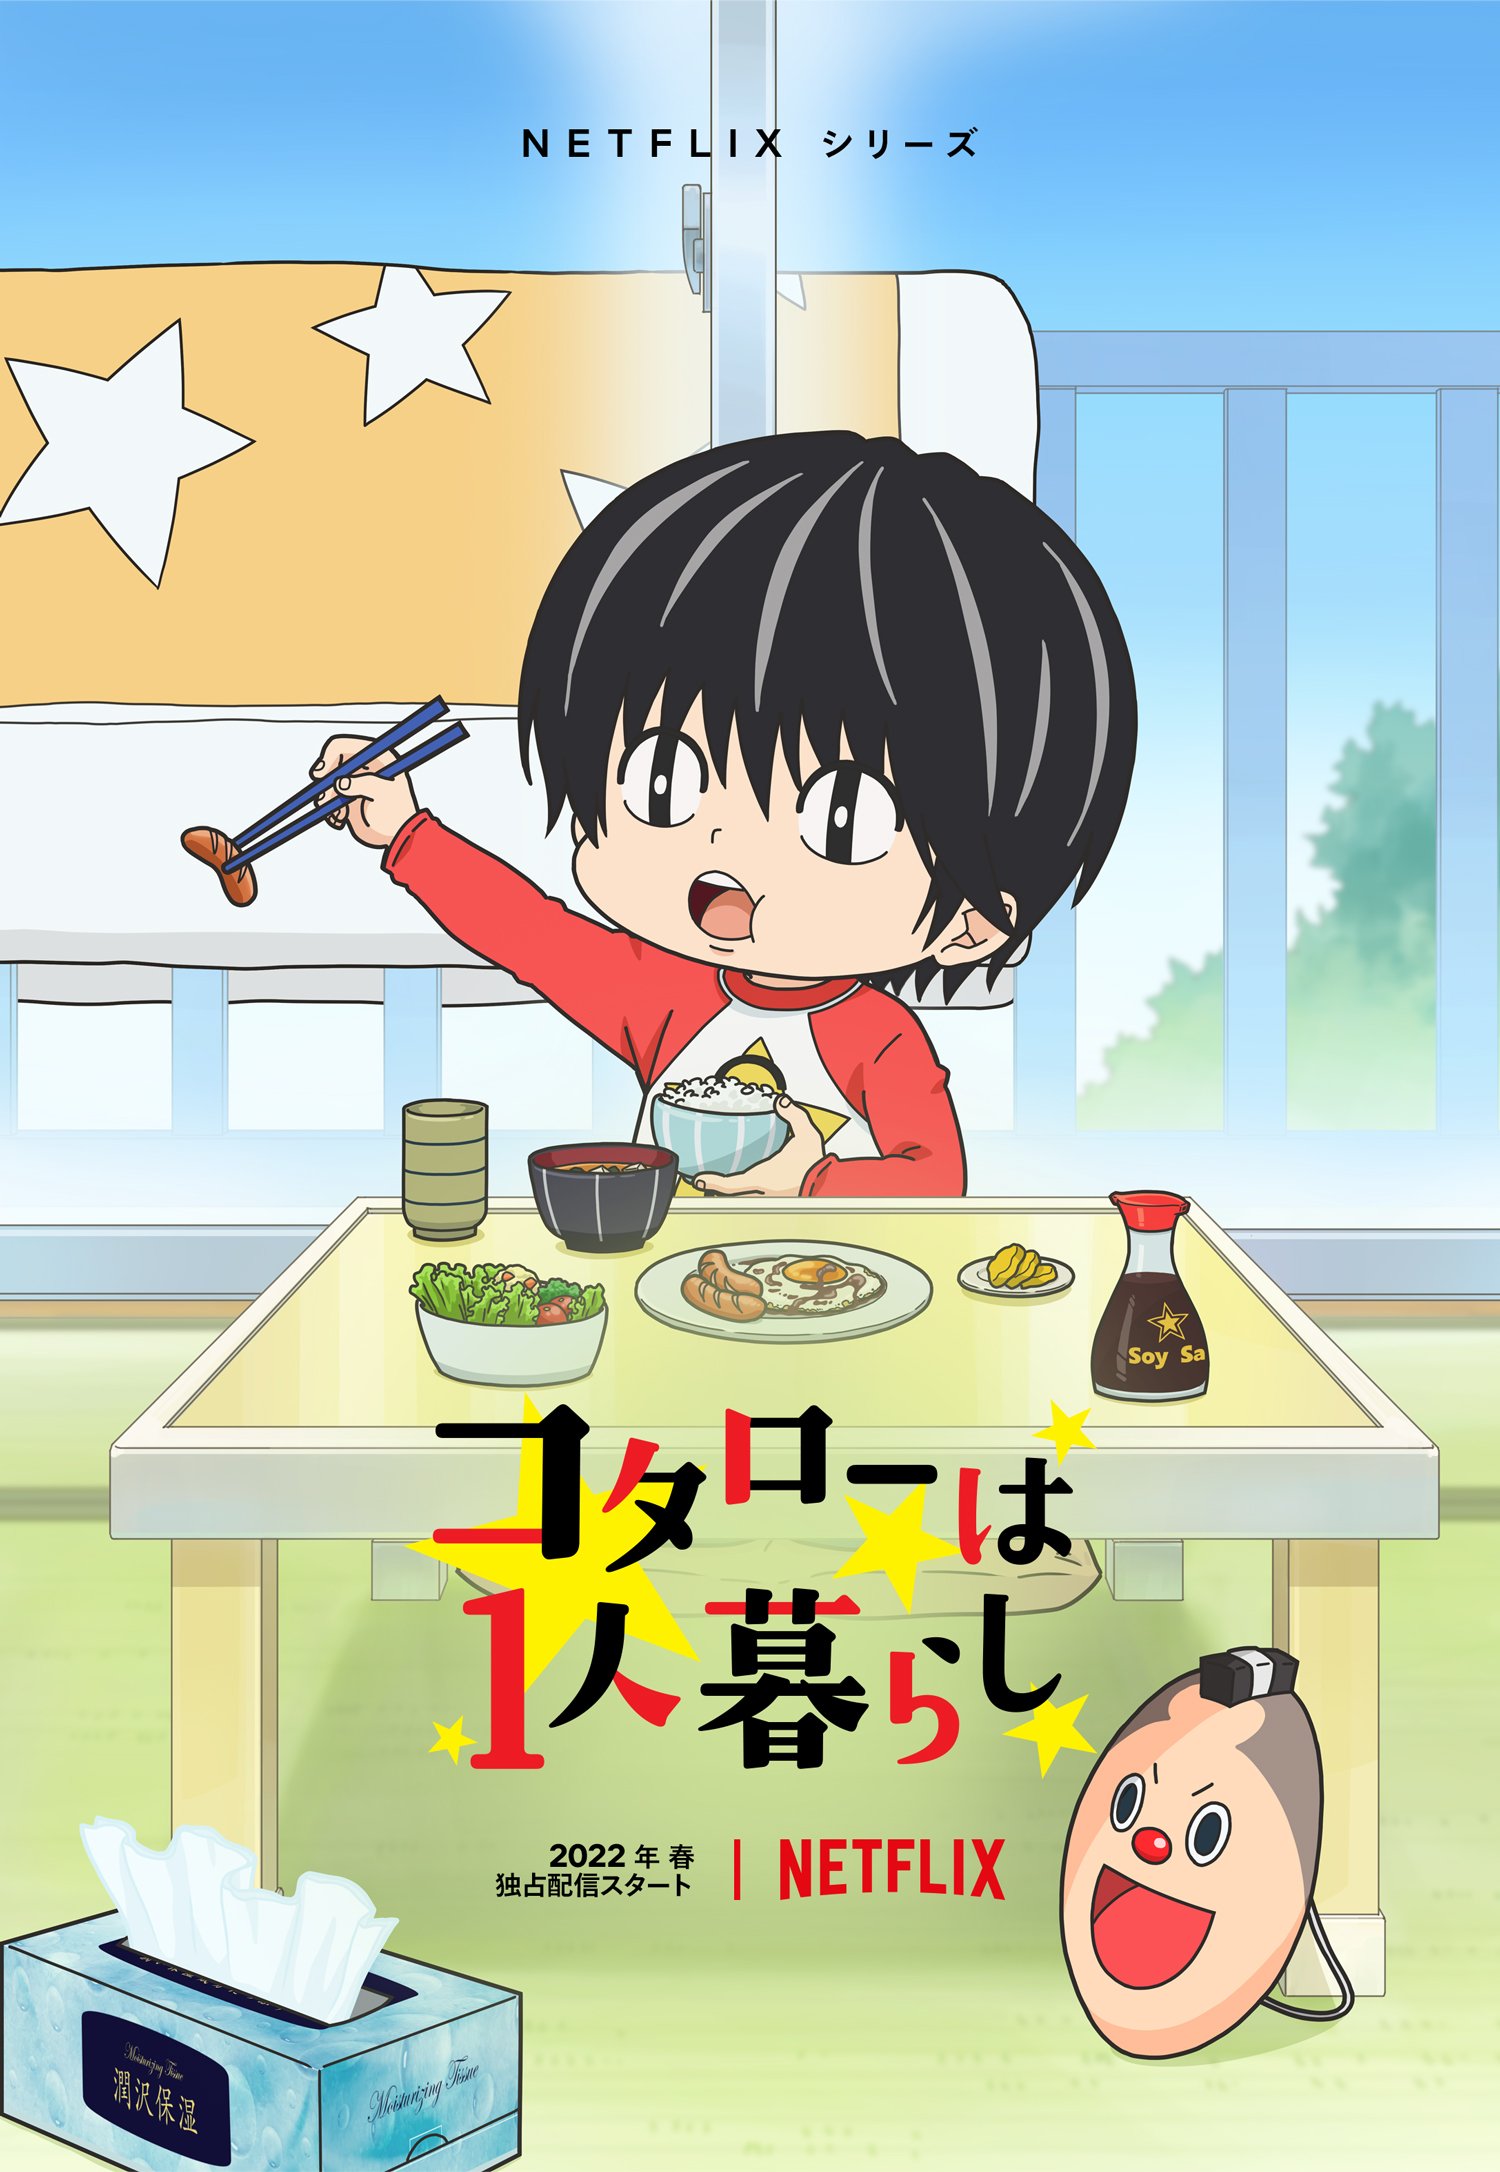 Kotaro wa Hitori Gurashi - Mangá sobre um garoto de 4 anos que mora sozinho terá anime na Netflix